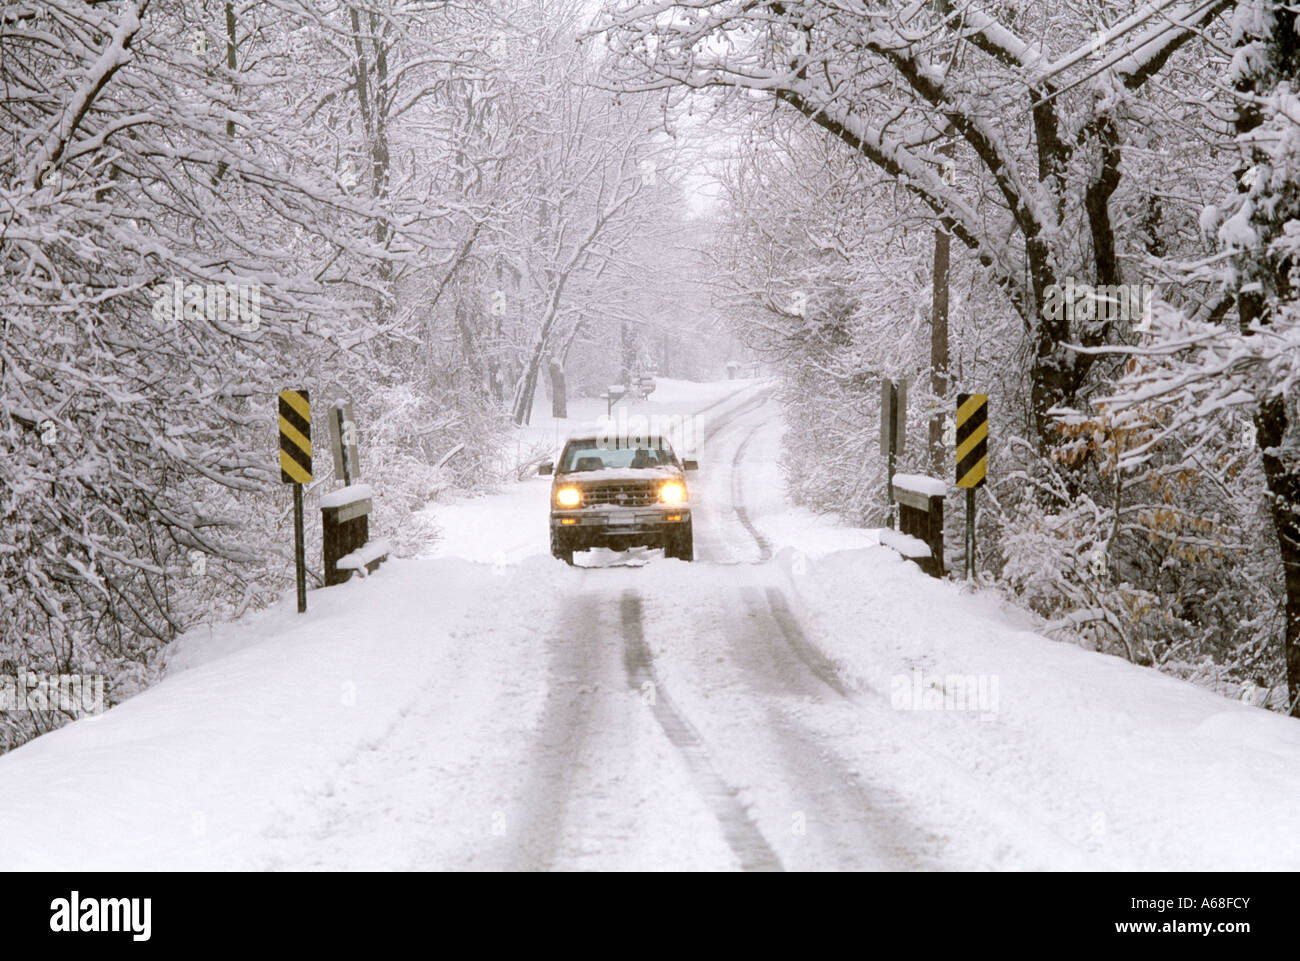 Sport utility vehicle attraversando una neve ghiacciata strada coperta Foto Stock